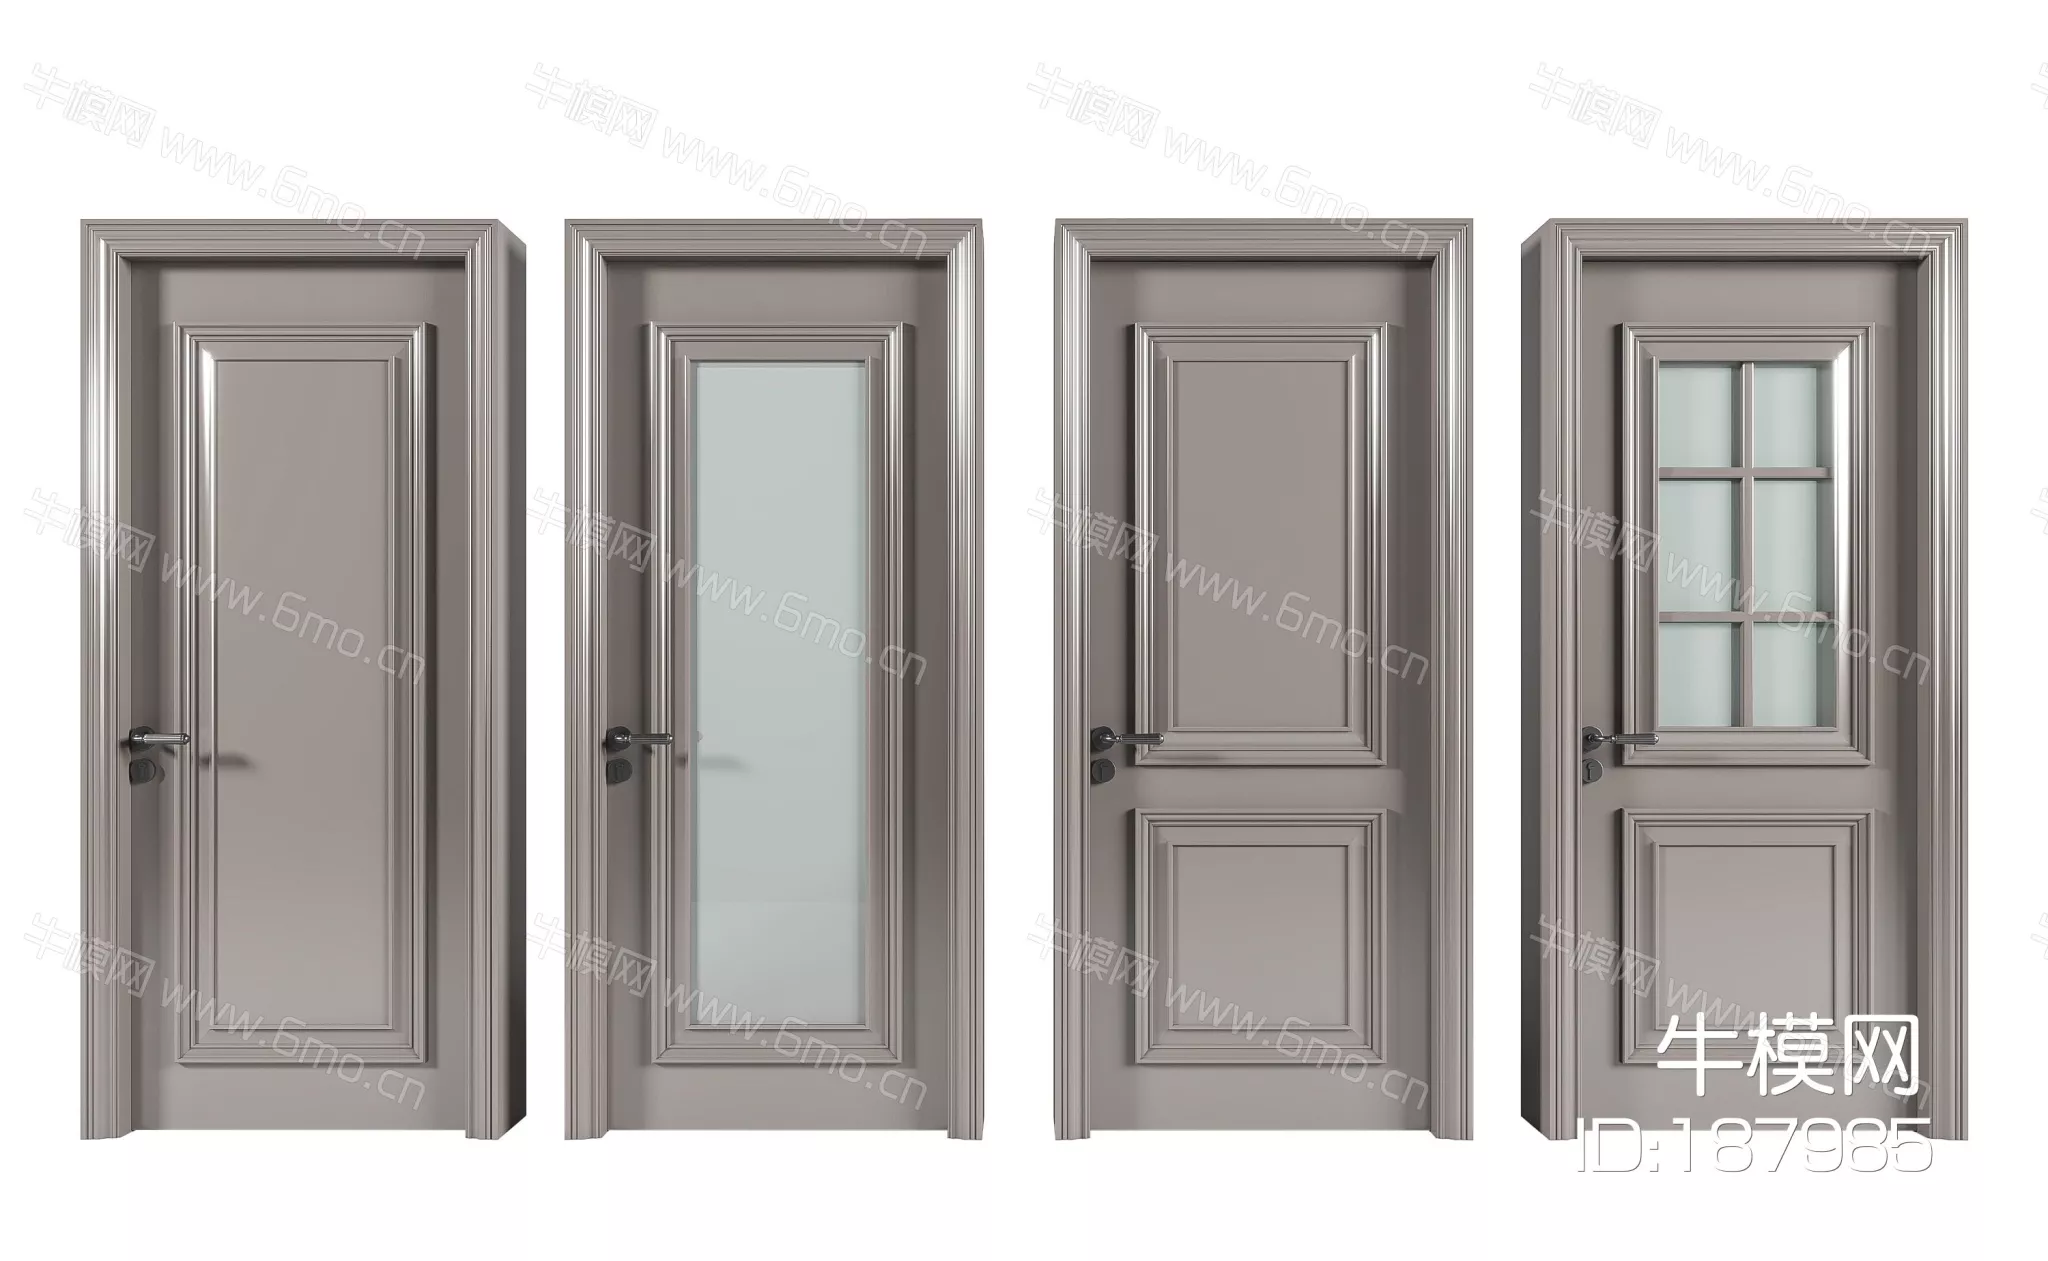 MODERN DOOR AND WINDOWS - SKETCHUP 3D MODEL - ENSCAPE - 187985